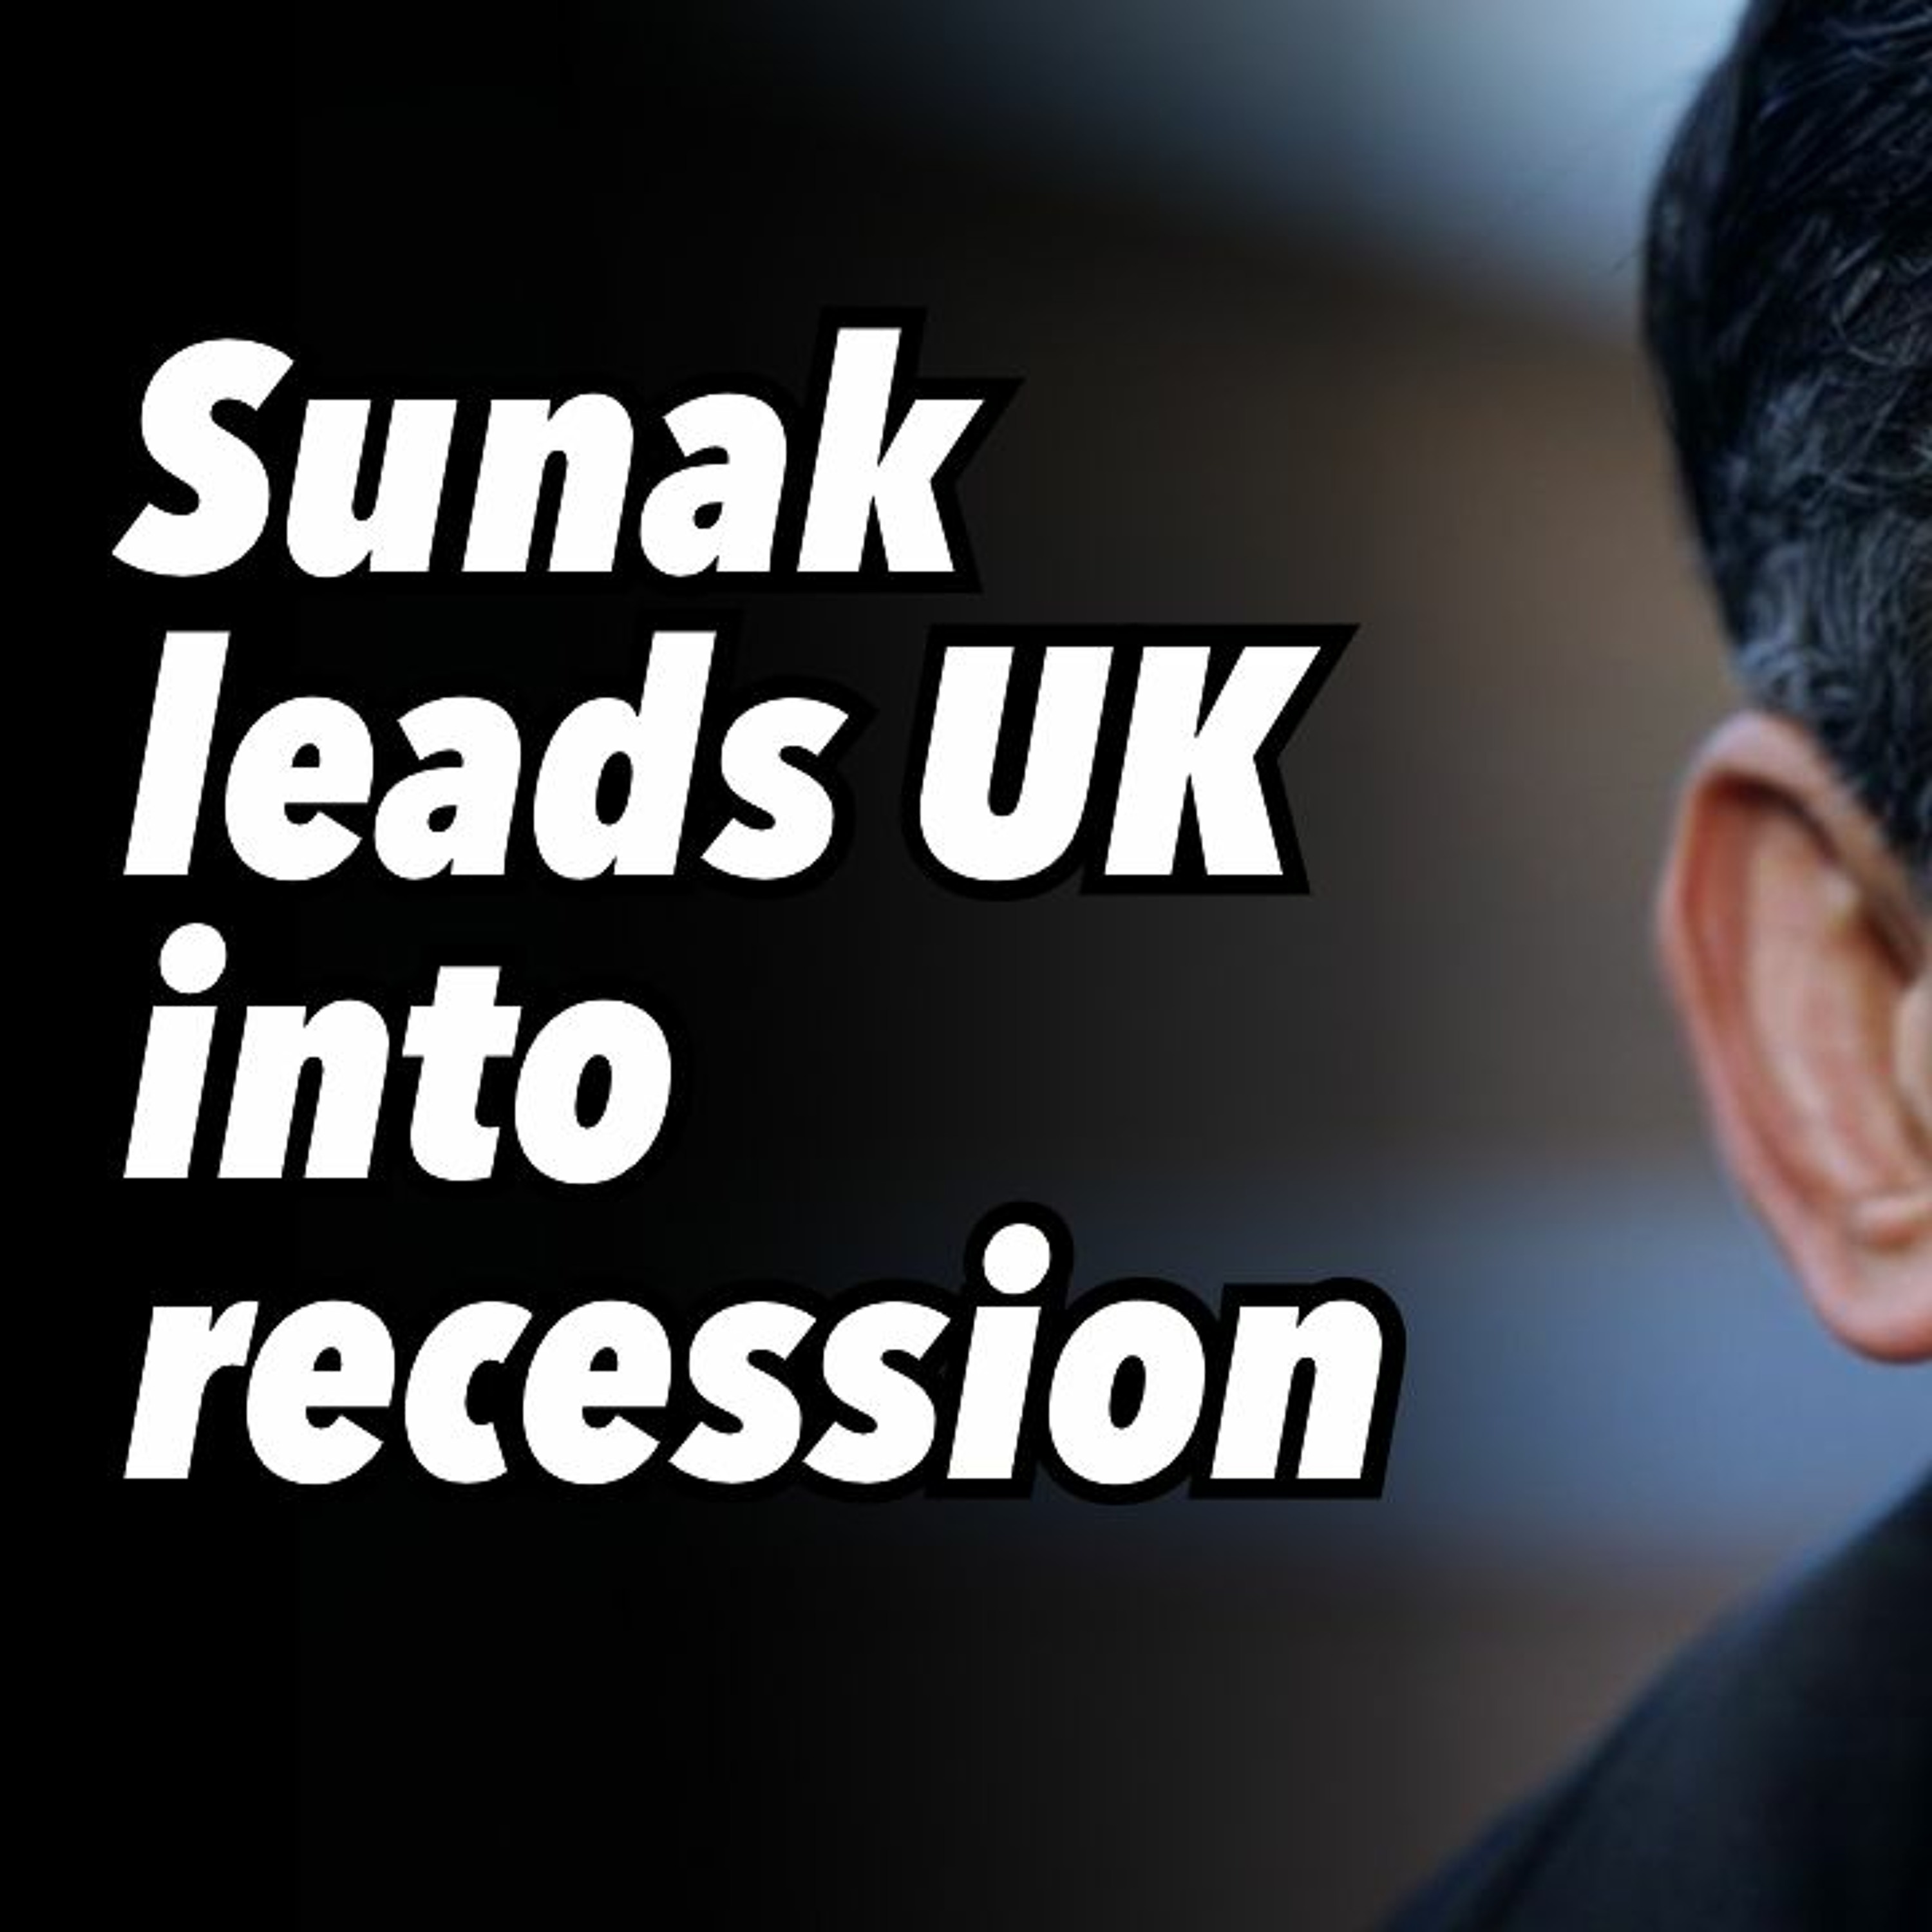 Sunak leads UK into recession